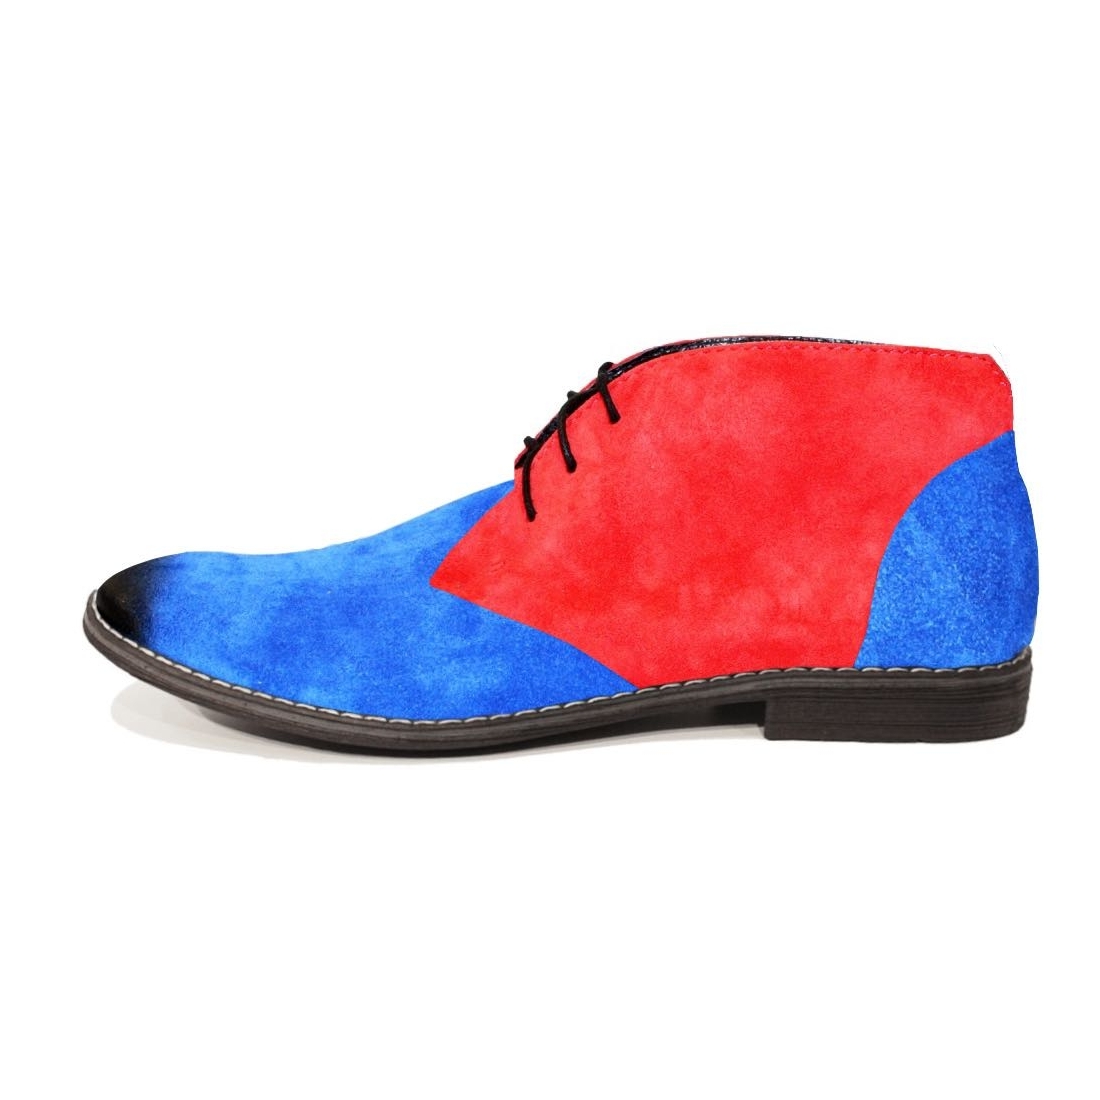 Modello Sterrer - Chukka Boots - Handmade Colorful Italian Leather Shoes